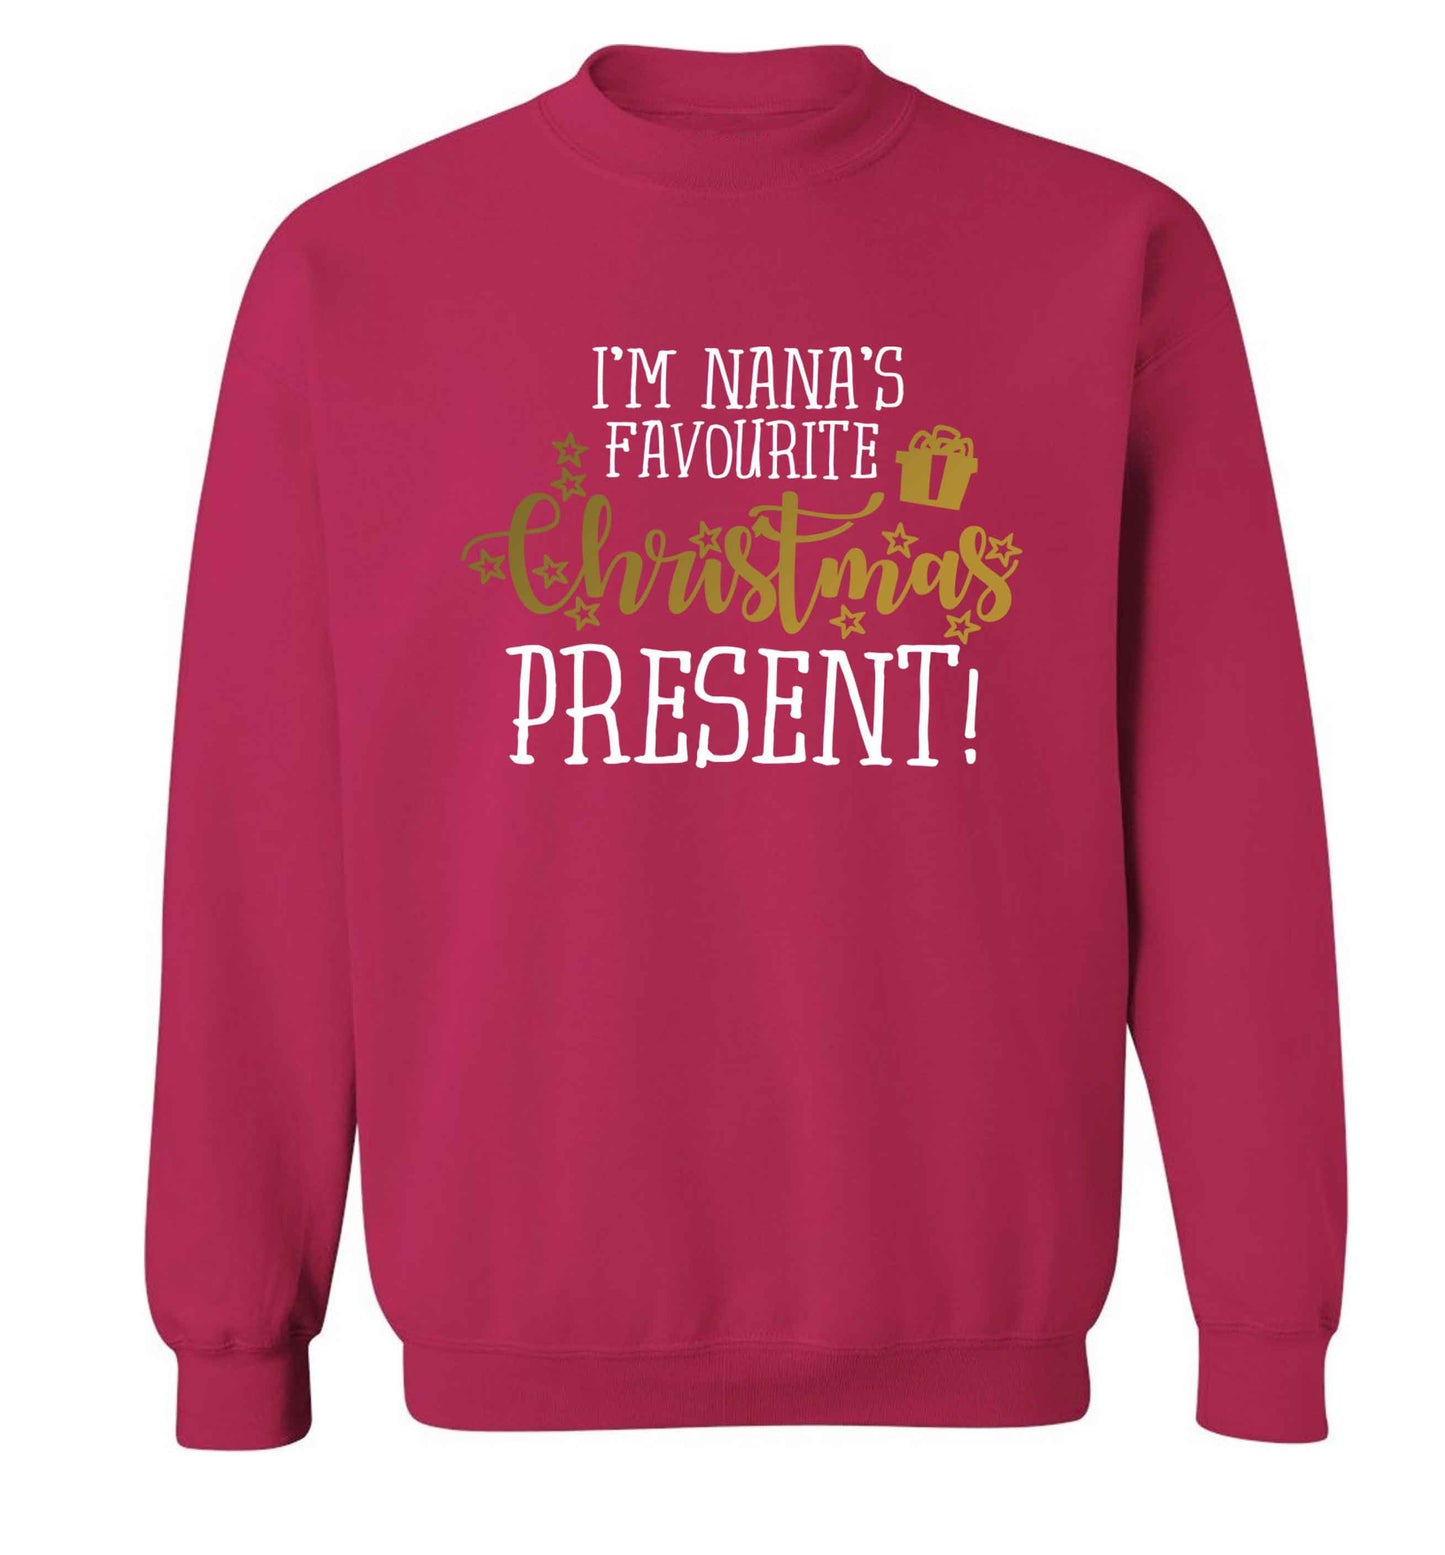 Nana's favourite Christmas present Adult's unisex pink Sweater 2XL